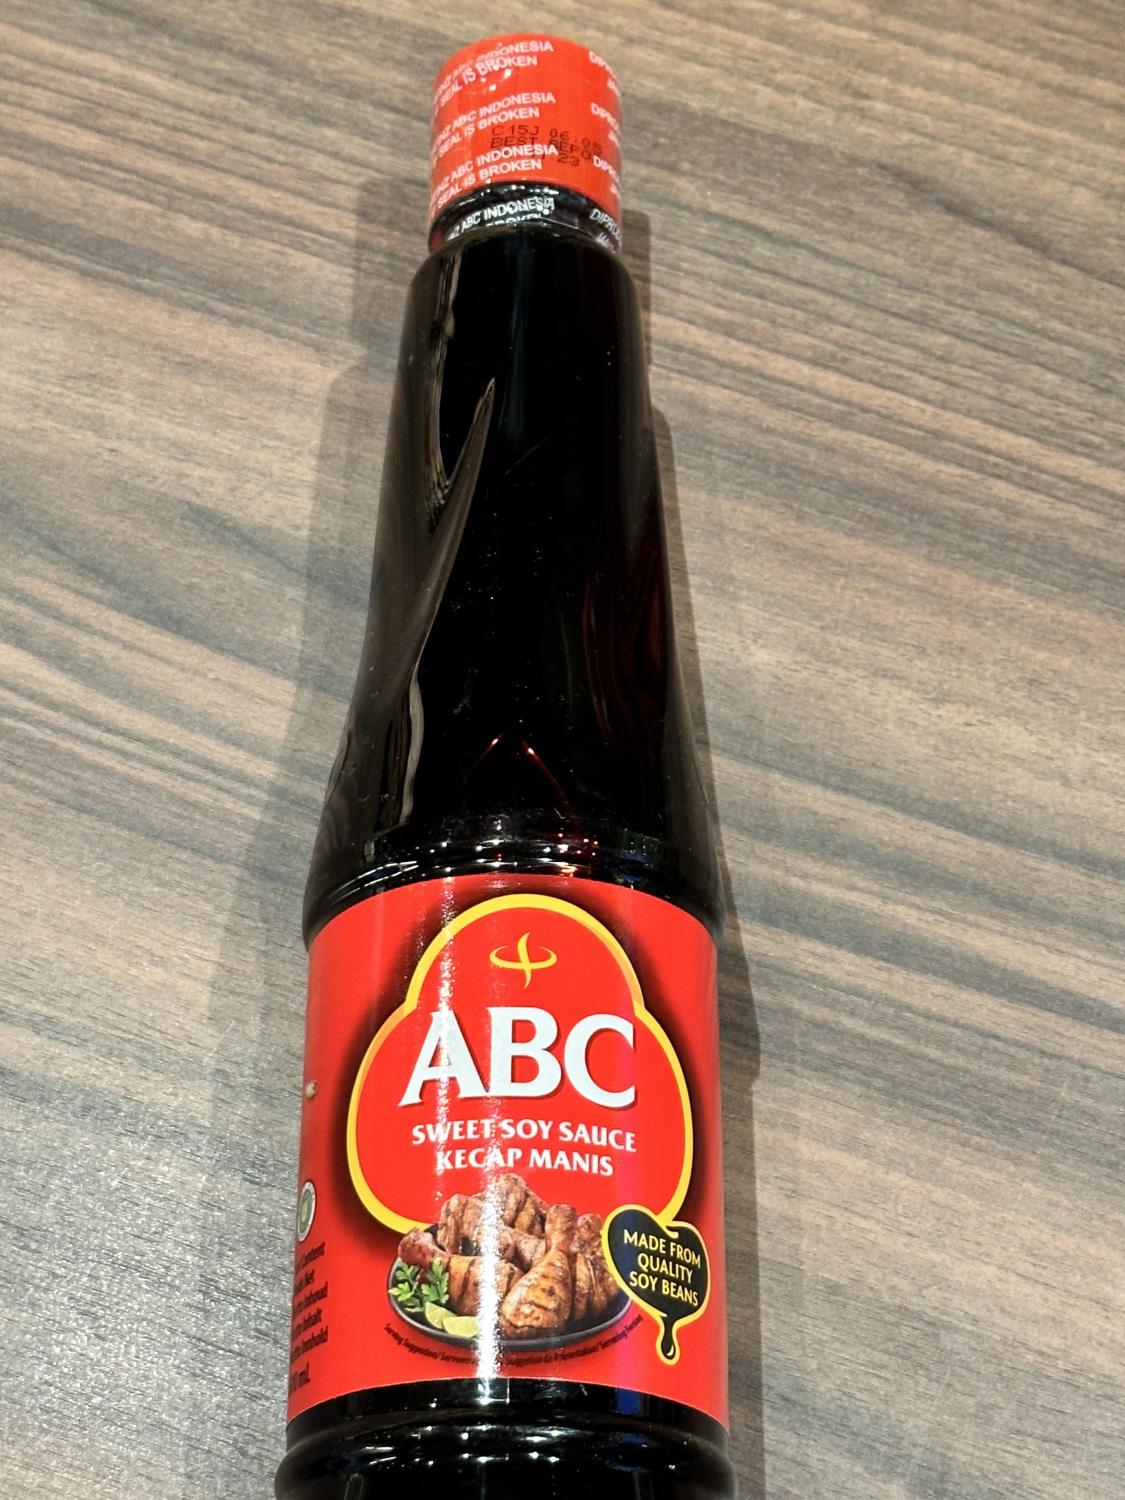 ABC Sweet soy sauce